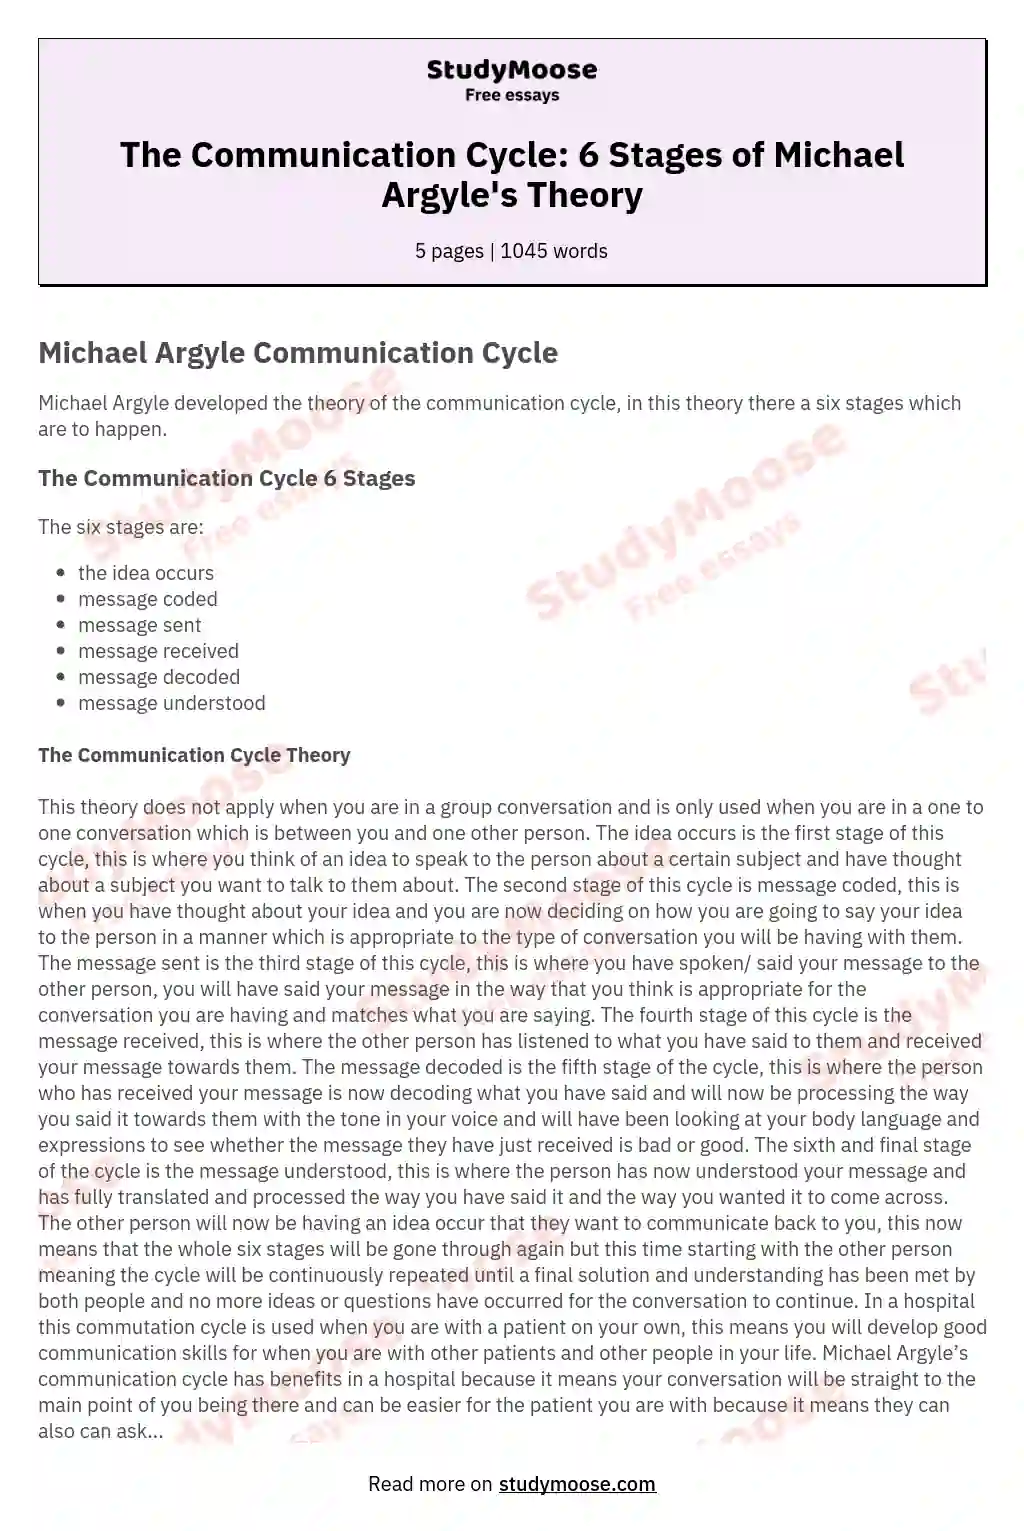 michael argyle communication cycle diagram 6 stages